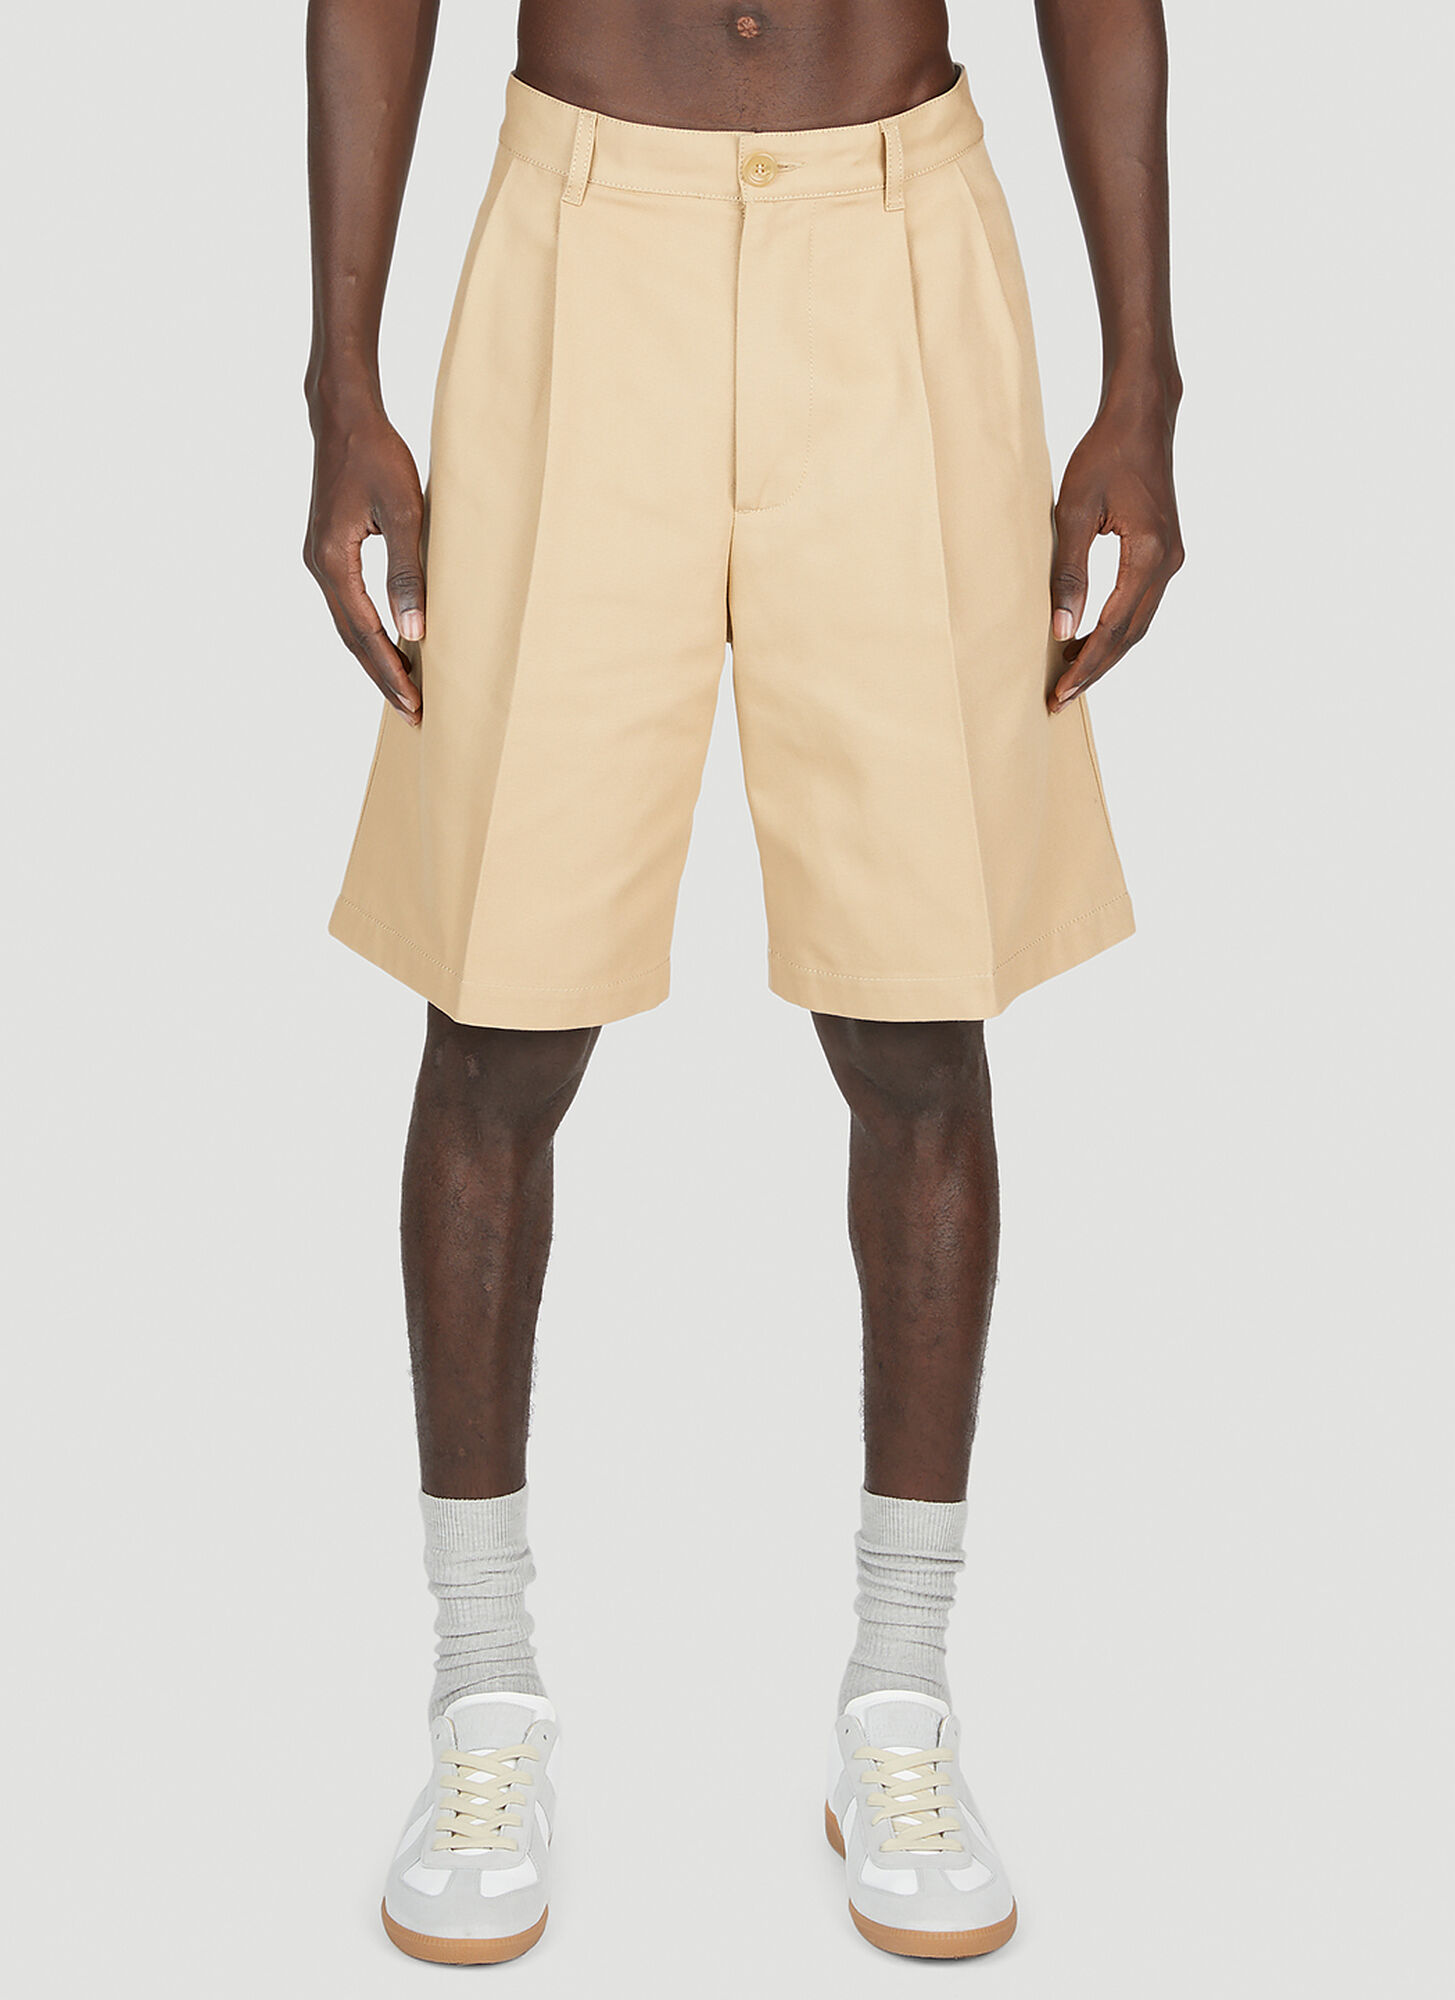 Gucci Folded Pleat Shorts Male Beigemale